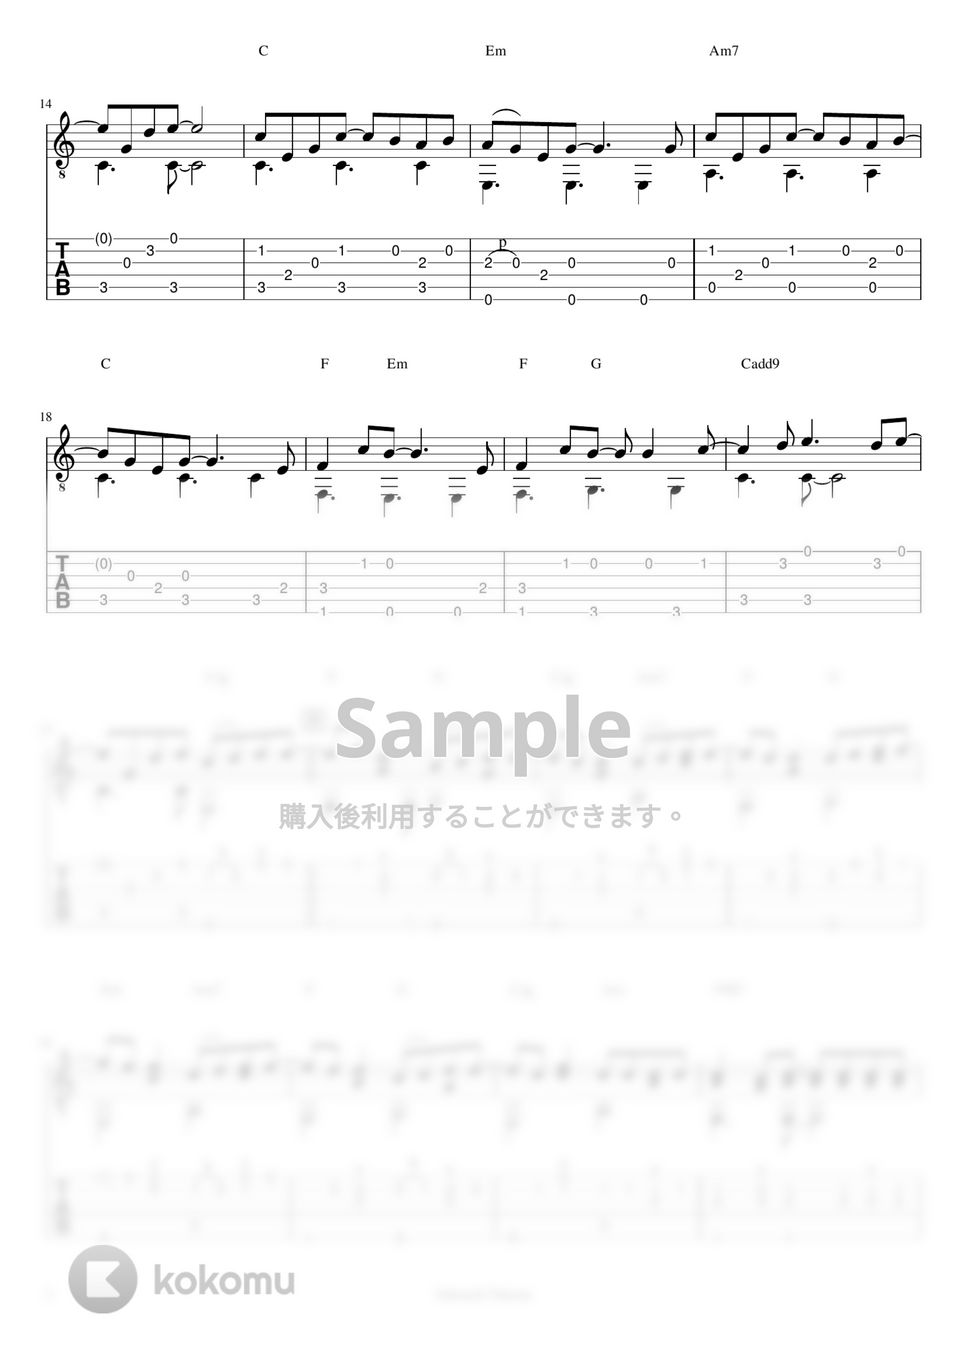 SEKAI NO OWARI - 眠り姫 (ソロギターTAB譜解説動画付き) by 仲内拓磨